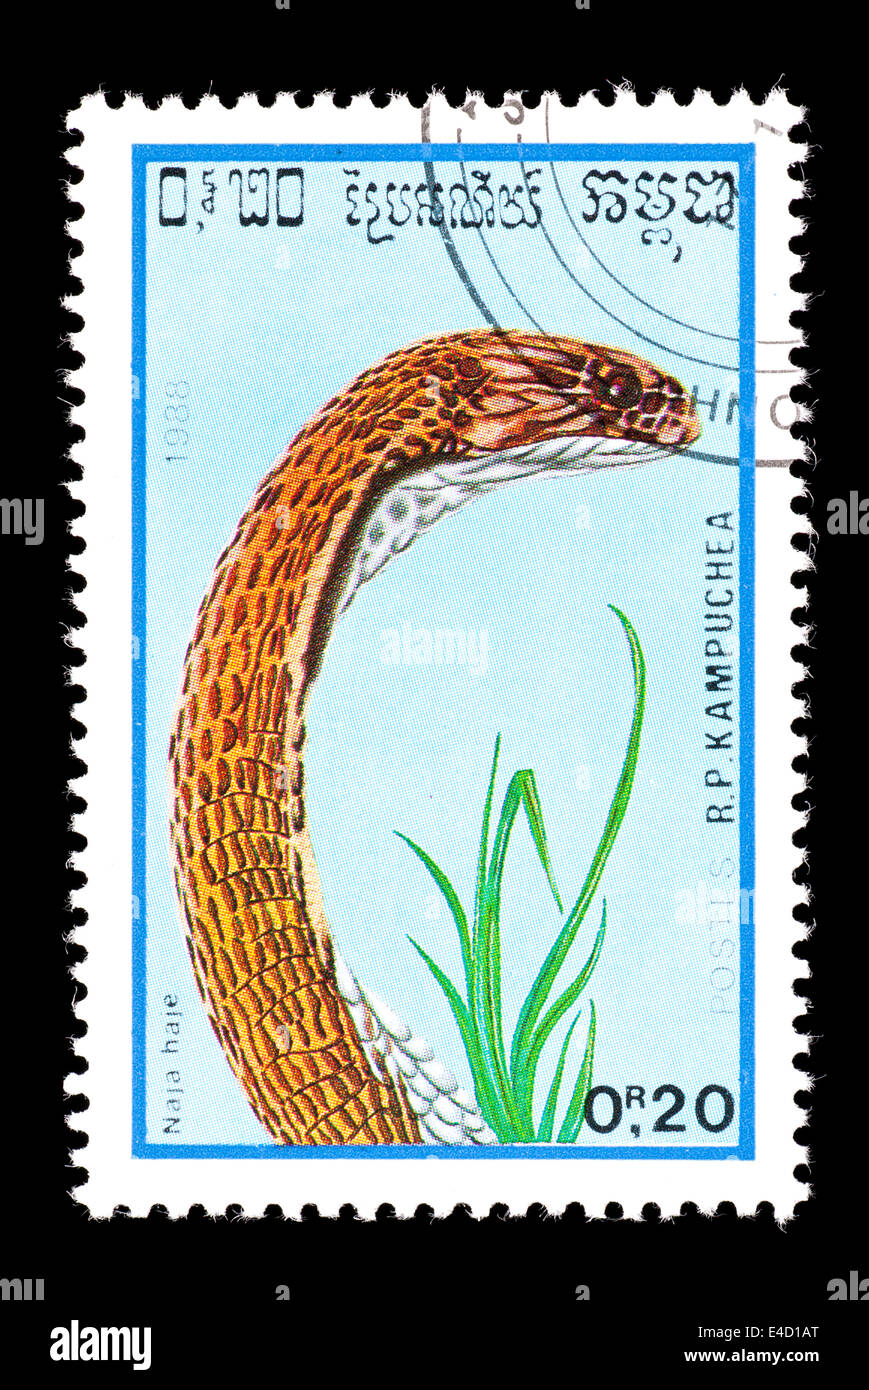 Postage stamp from Cambodia (Kampuchea) depicting a  Egyptian cobra (Naja haje). Stock Photo